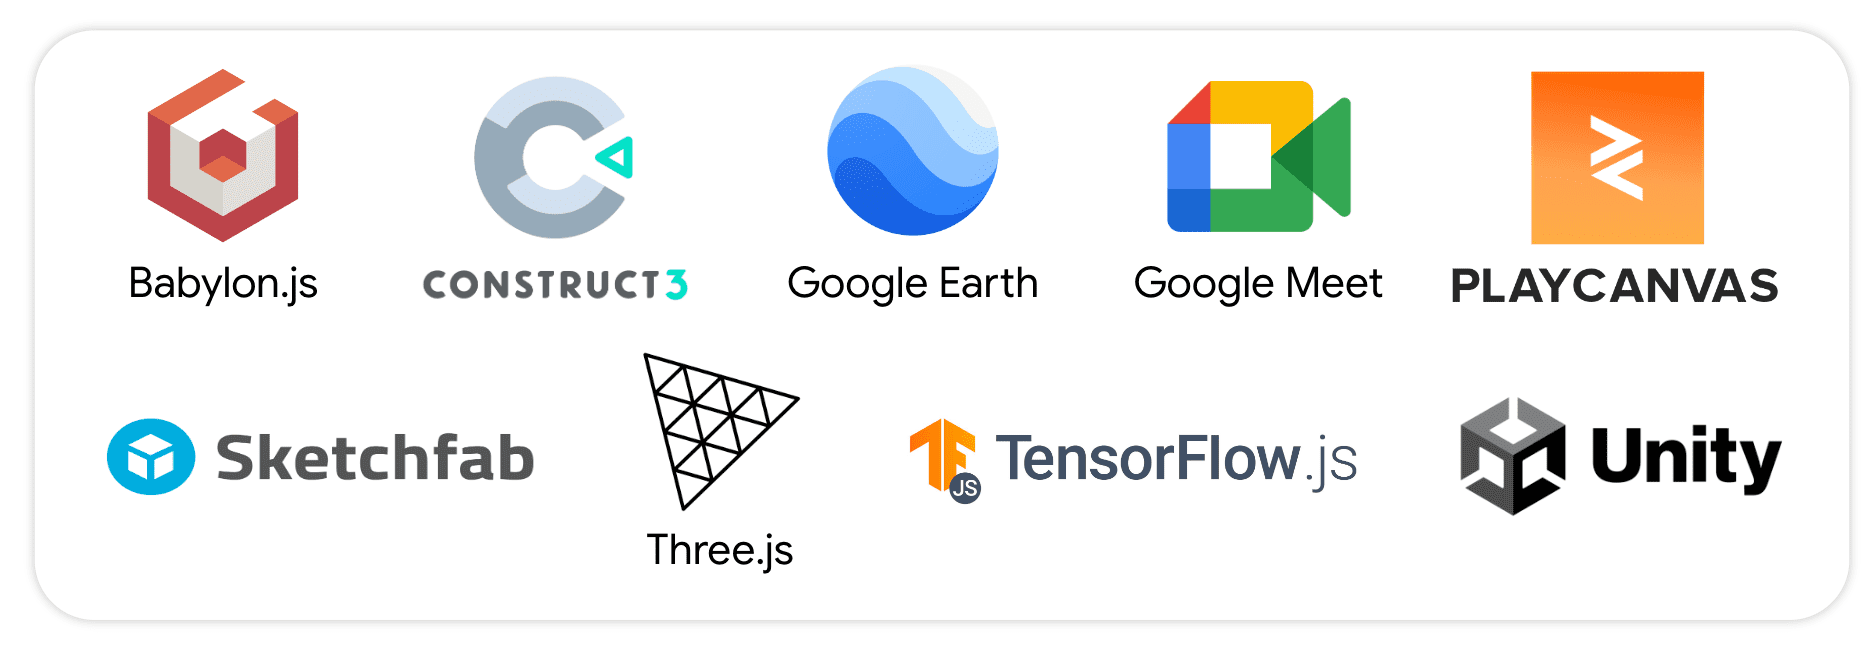 Babylon.js、Construct 3、Google Earth、Google Meet、PlayCanvas、Sketchfab、Three.JS、TensorFlow.js、Unity